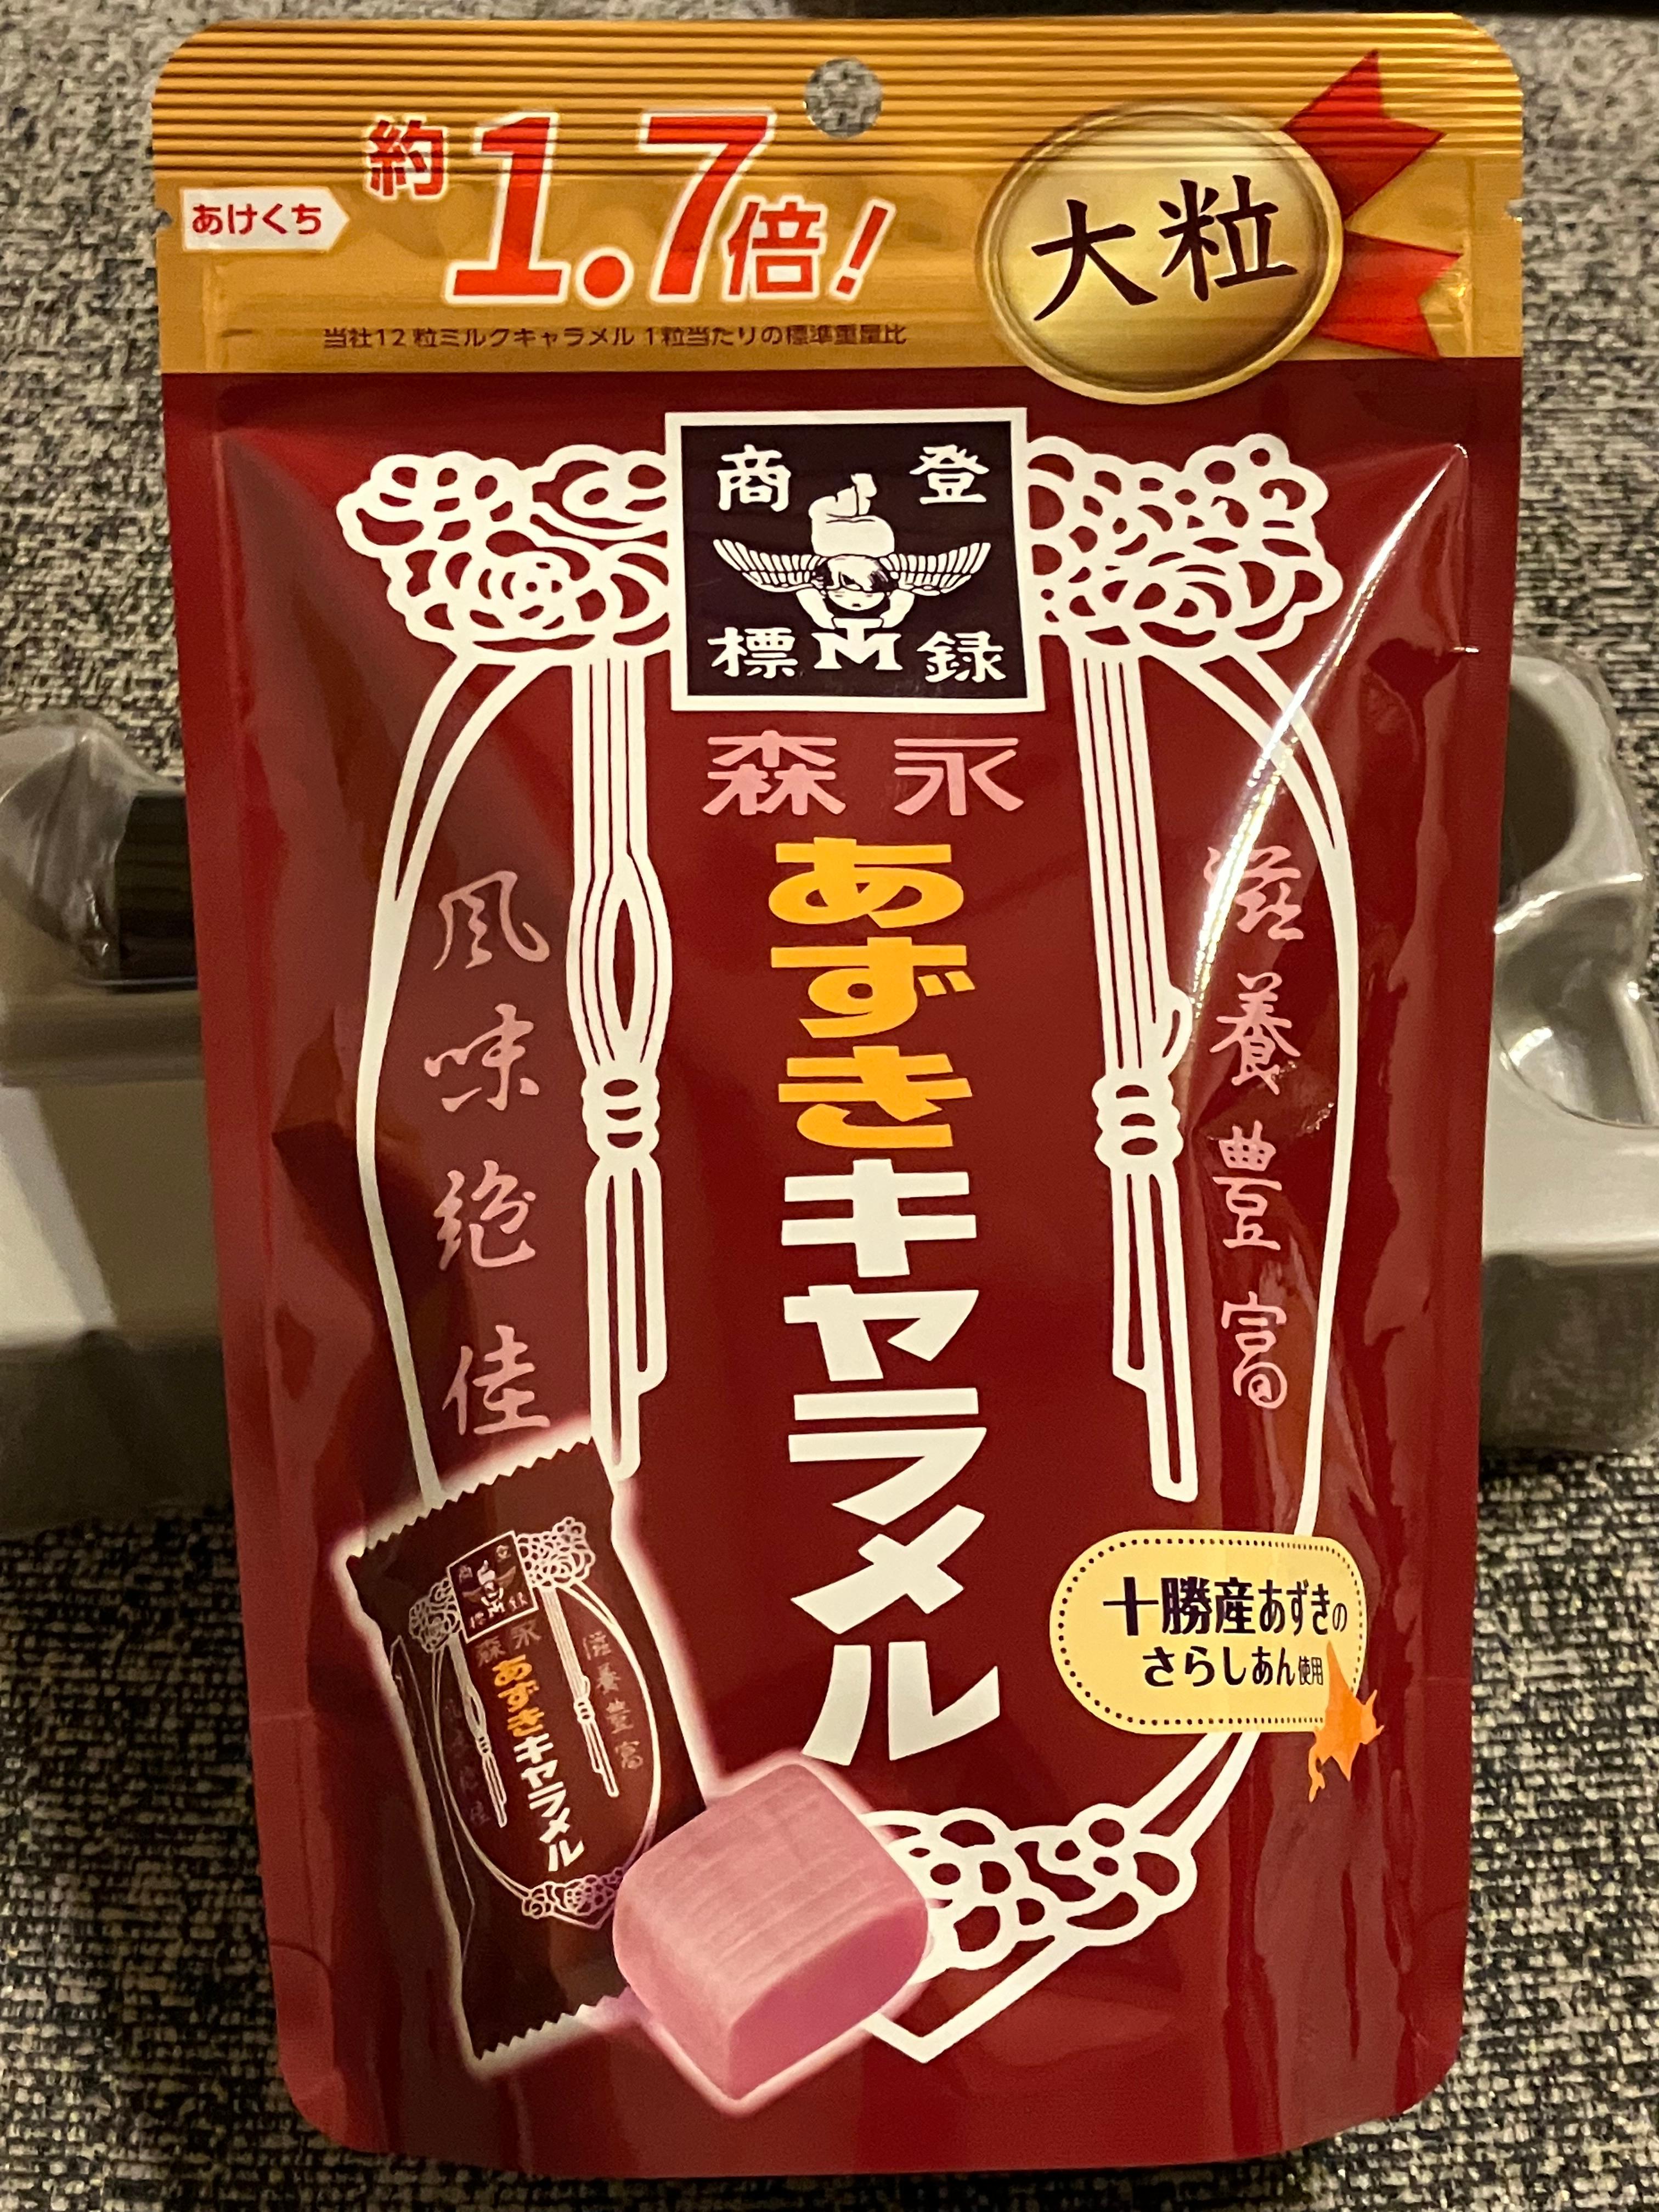 LOHACO - あずきキャラメル大粒 2袋 森永製菓